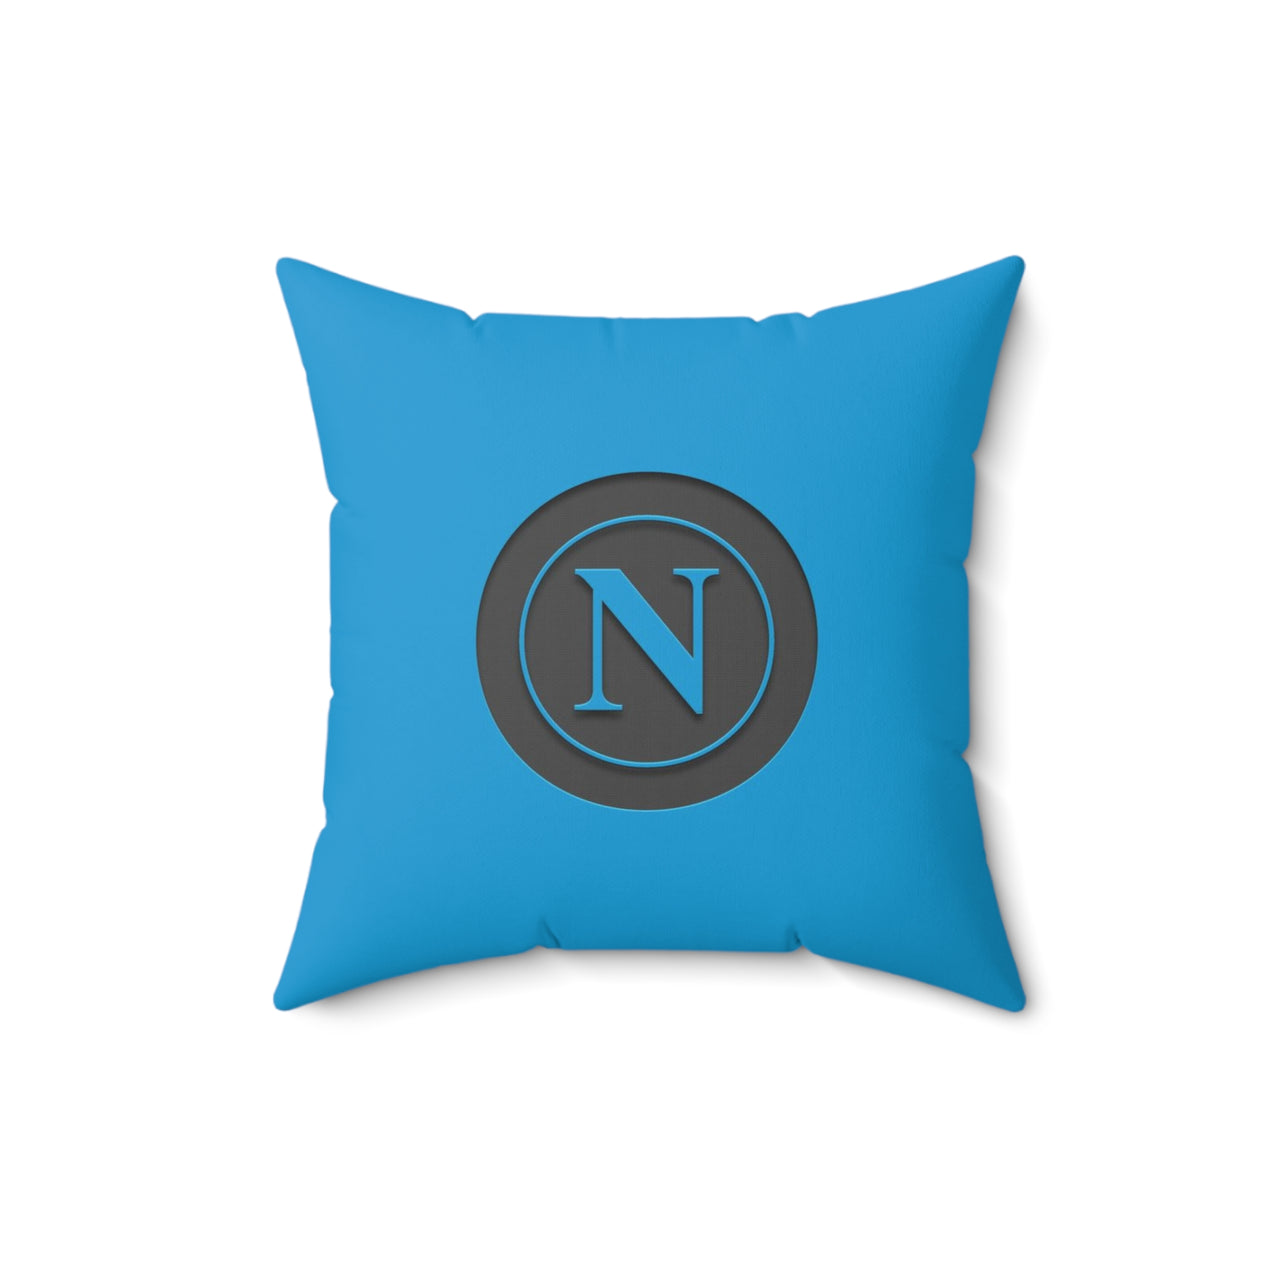 Napoli Square Pillow